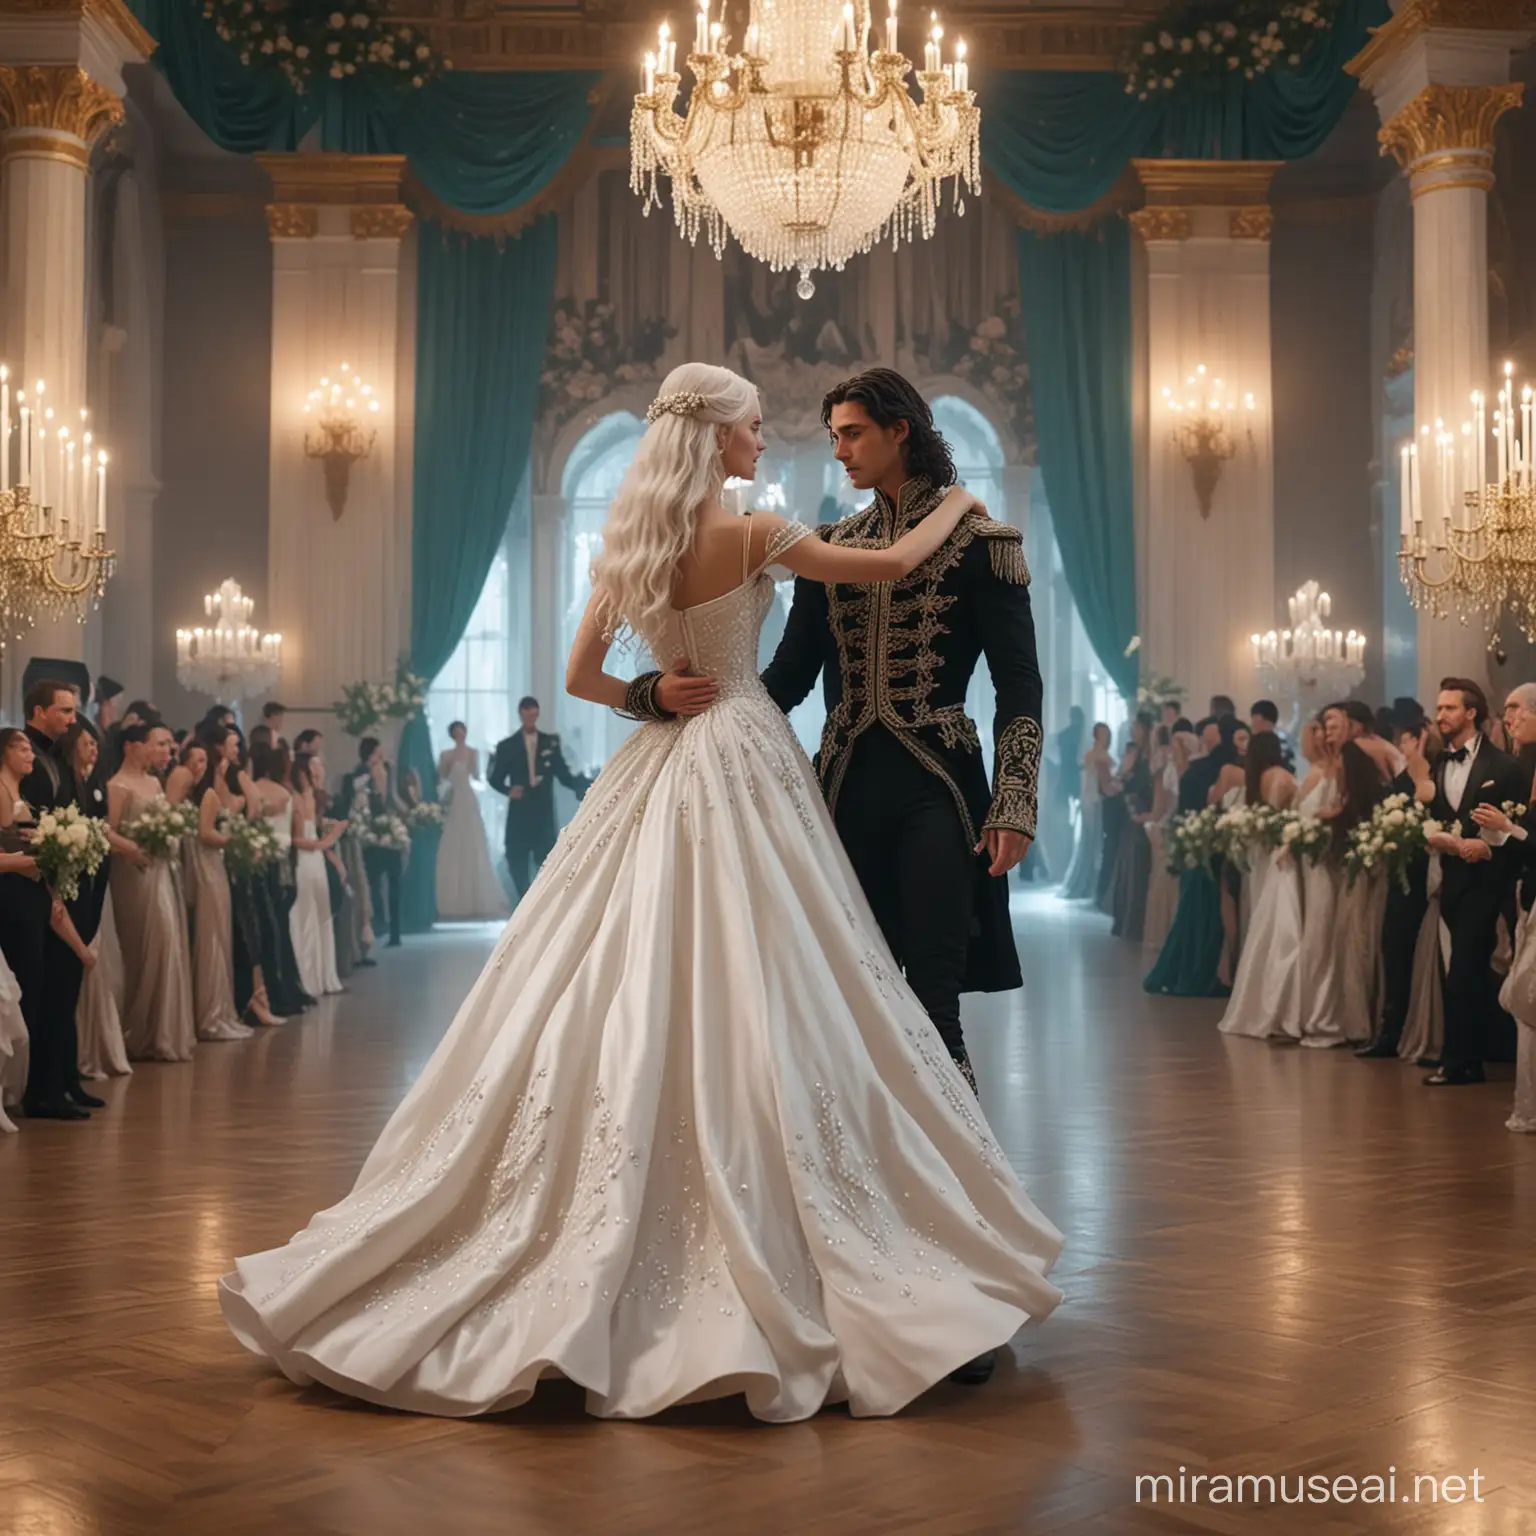 Fantasy Wedding Dance Elegant Ballroom Affair with a Prince